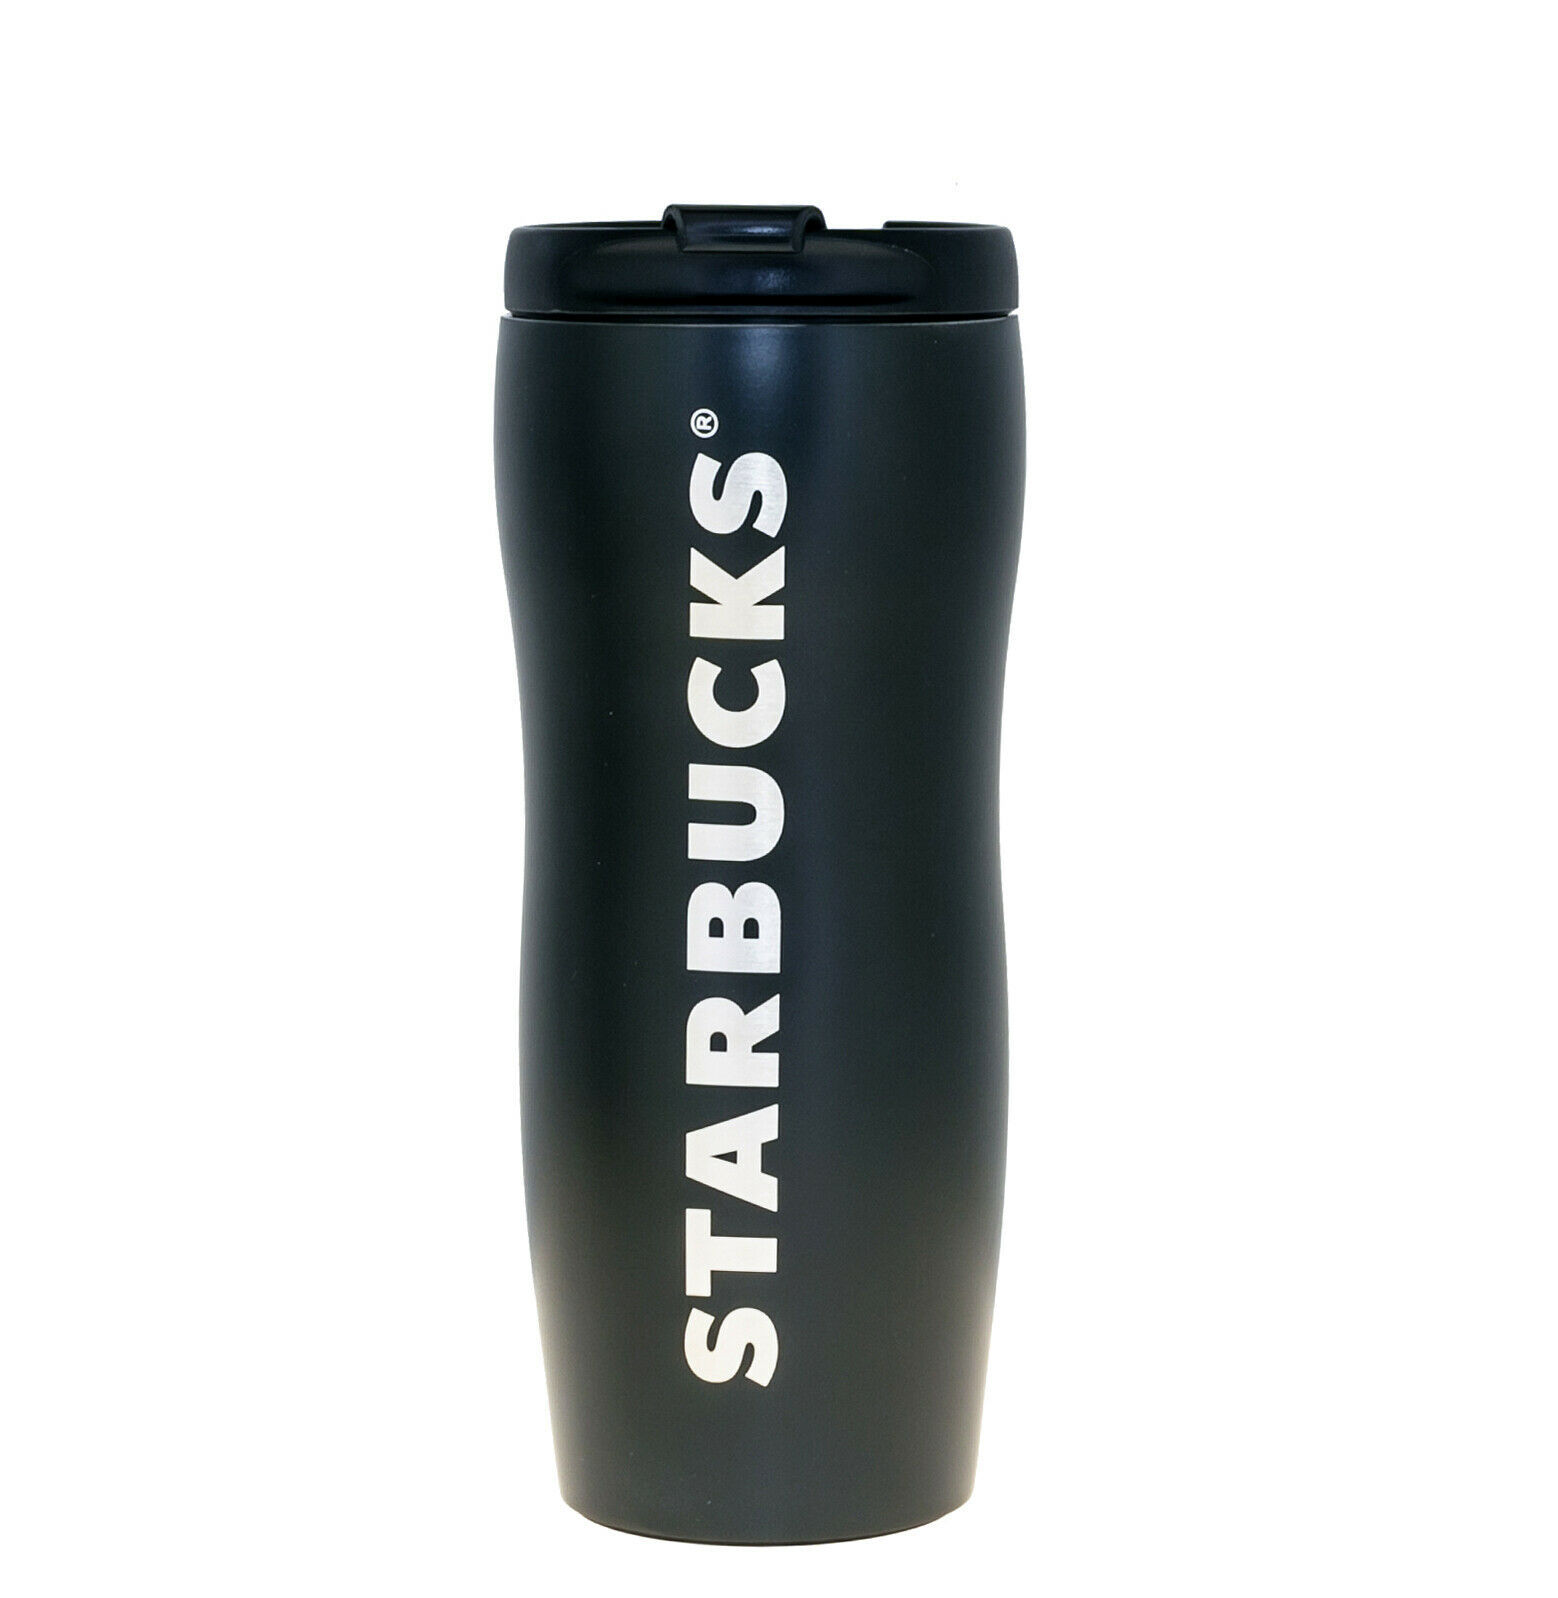 Starbucks, Accessories, Starbucks Matte Black Tumbler Lv Logo